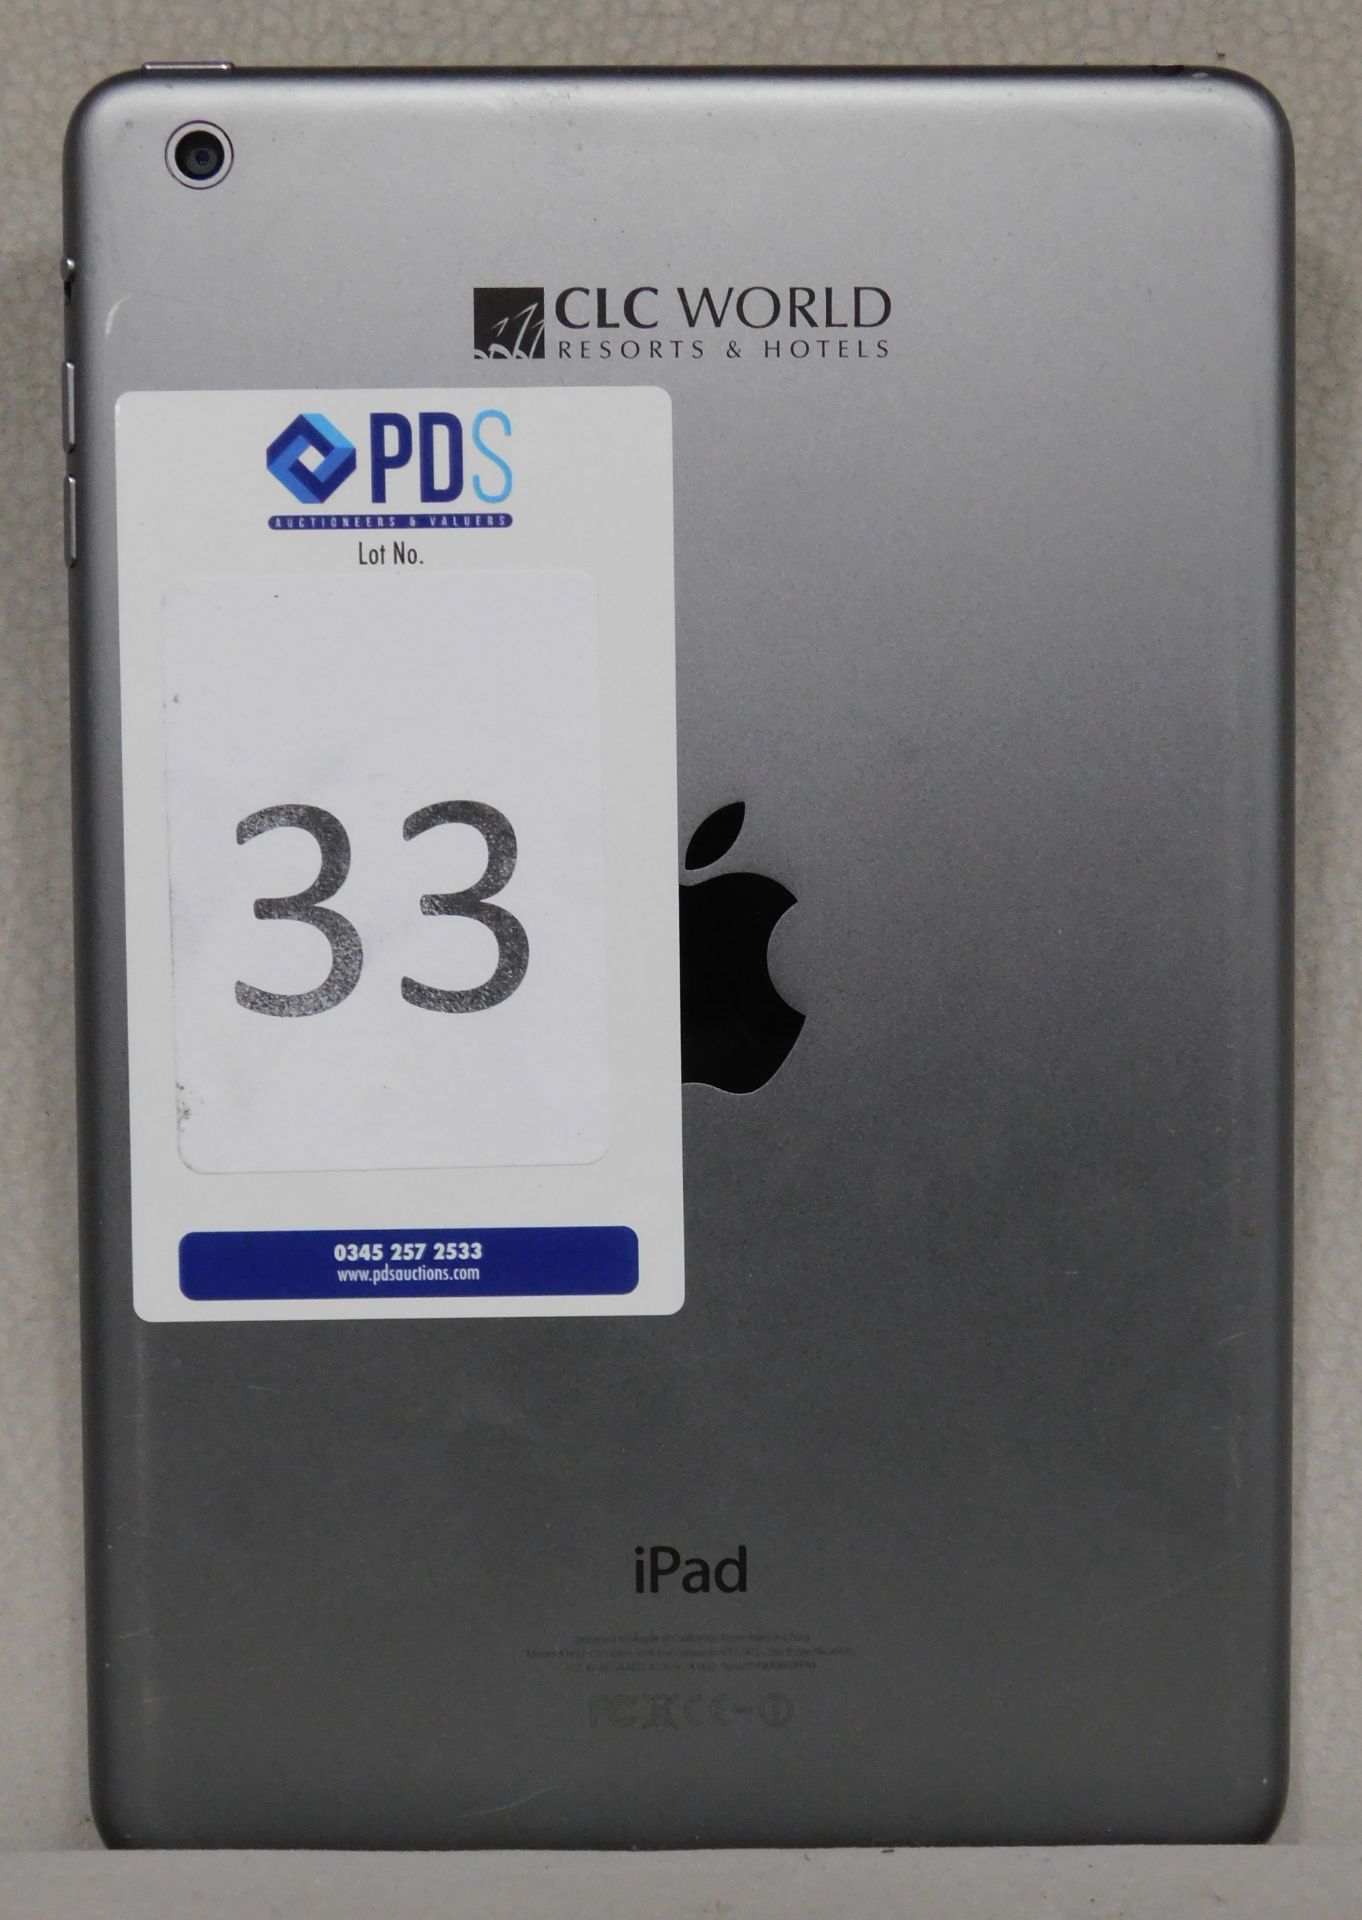 Apple iPad Mini WIFI 16GB Space Grey, Model Number: A1432, Serial Number: F7MMGBKDFP84 (Engraved - Image 2 of 2